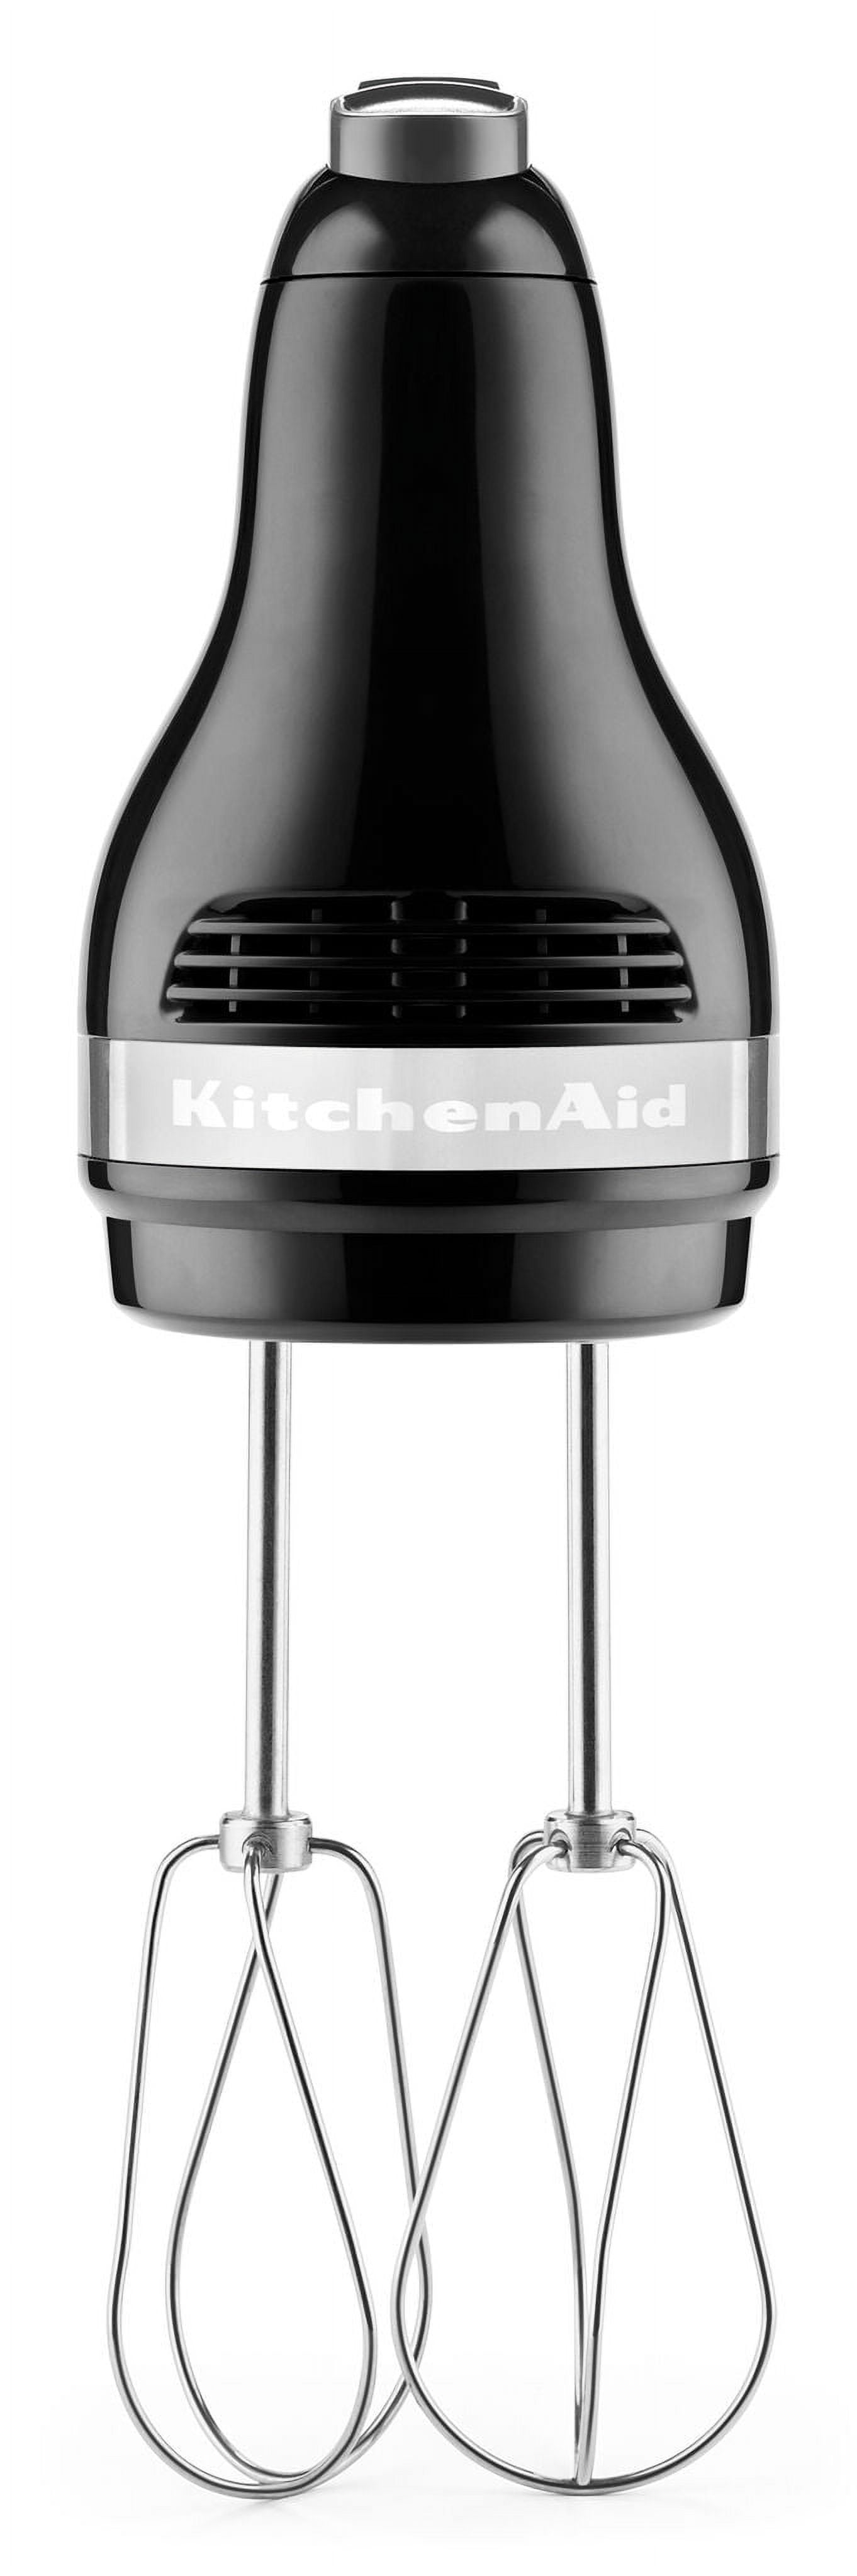 KitchenAid 5-Speed Ultra Power Hand Mixer, Black - Shop Blenders